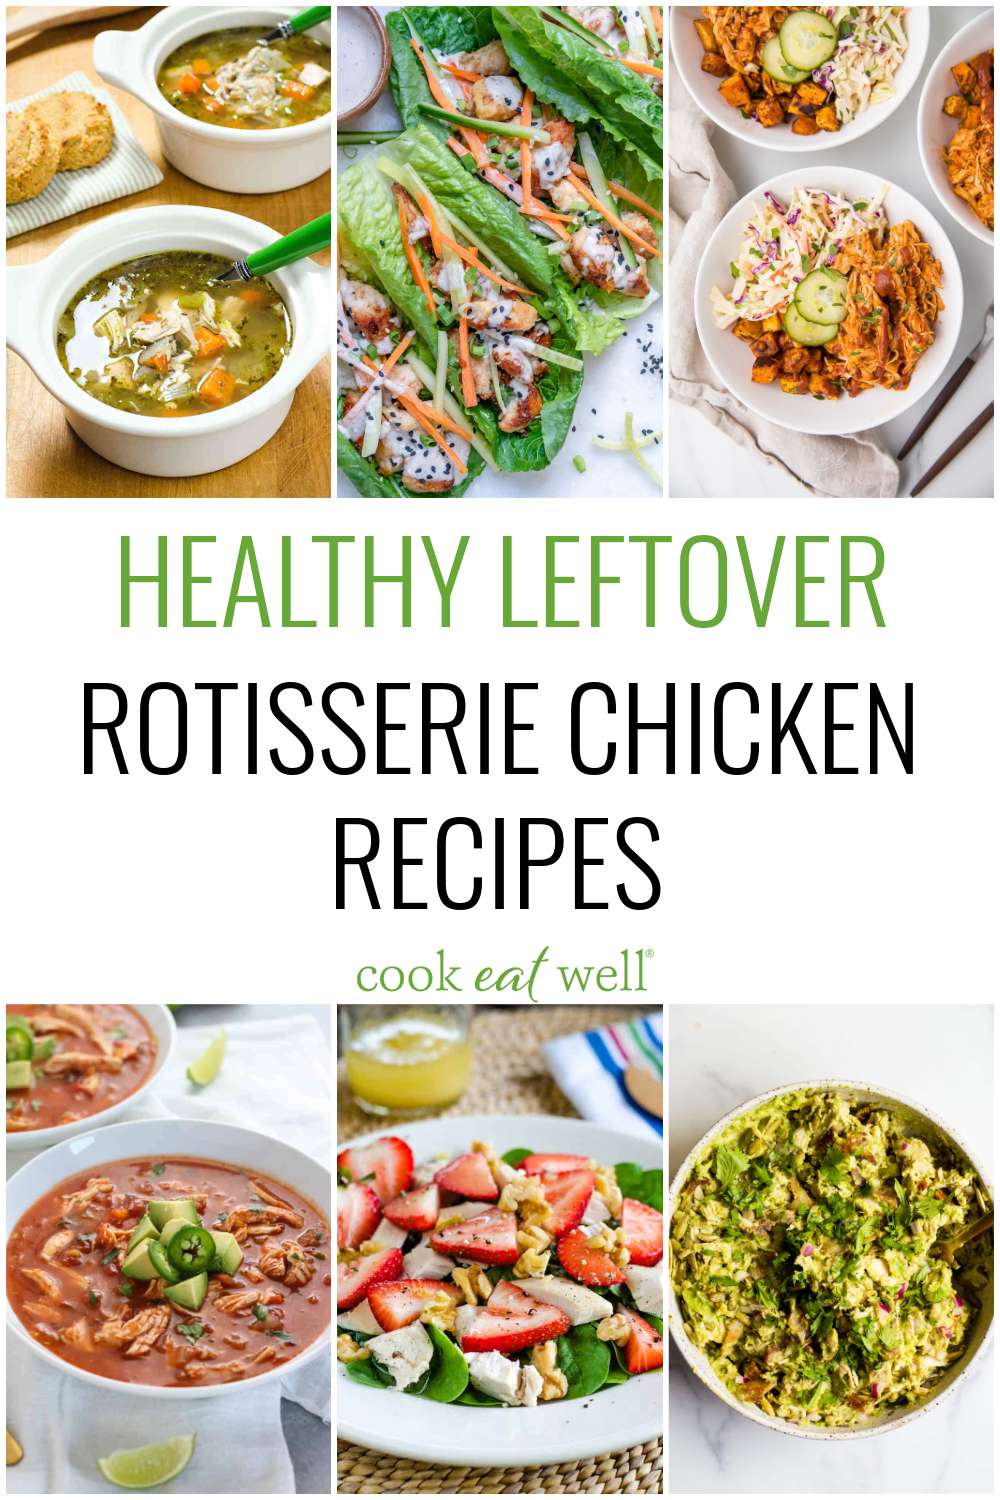 Healthy leftover rotisserie chicken recipes